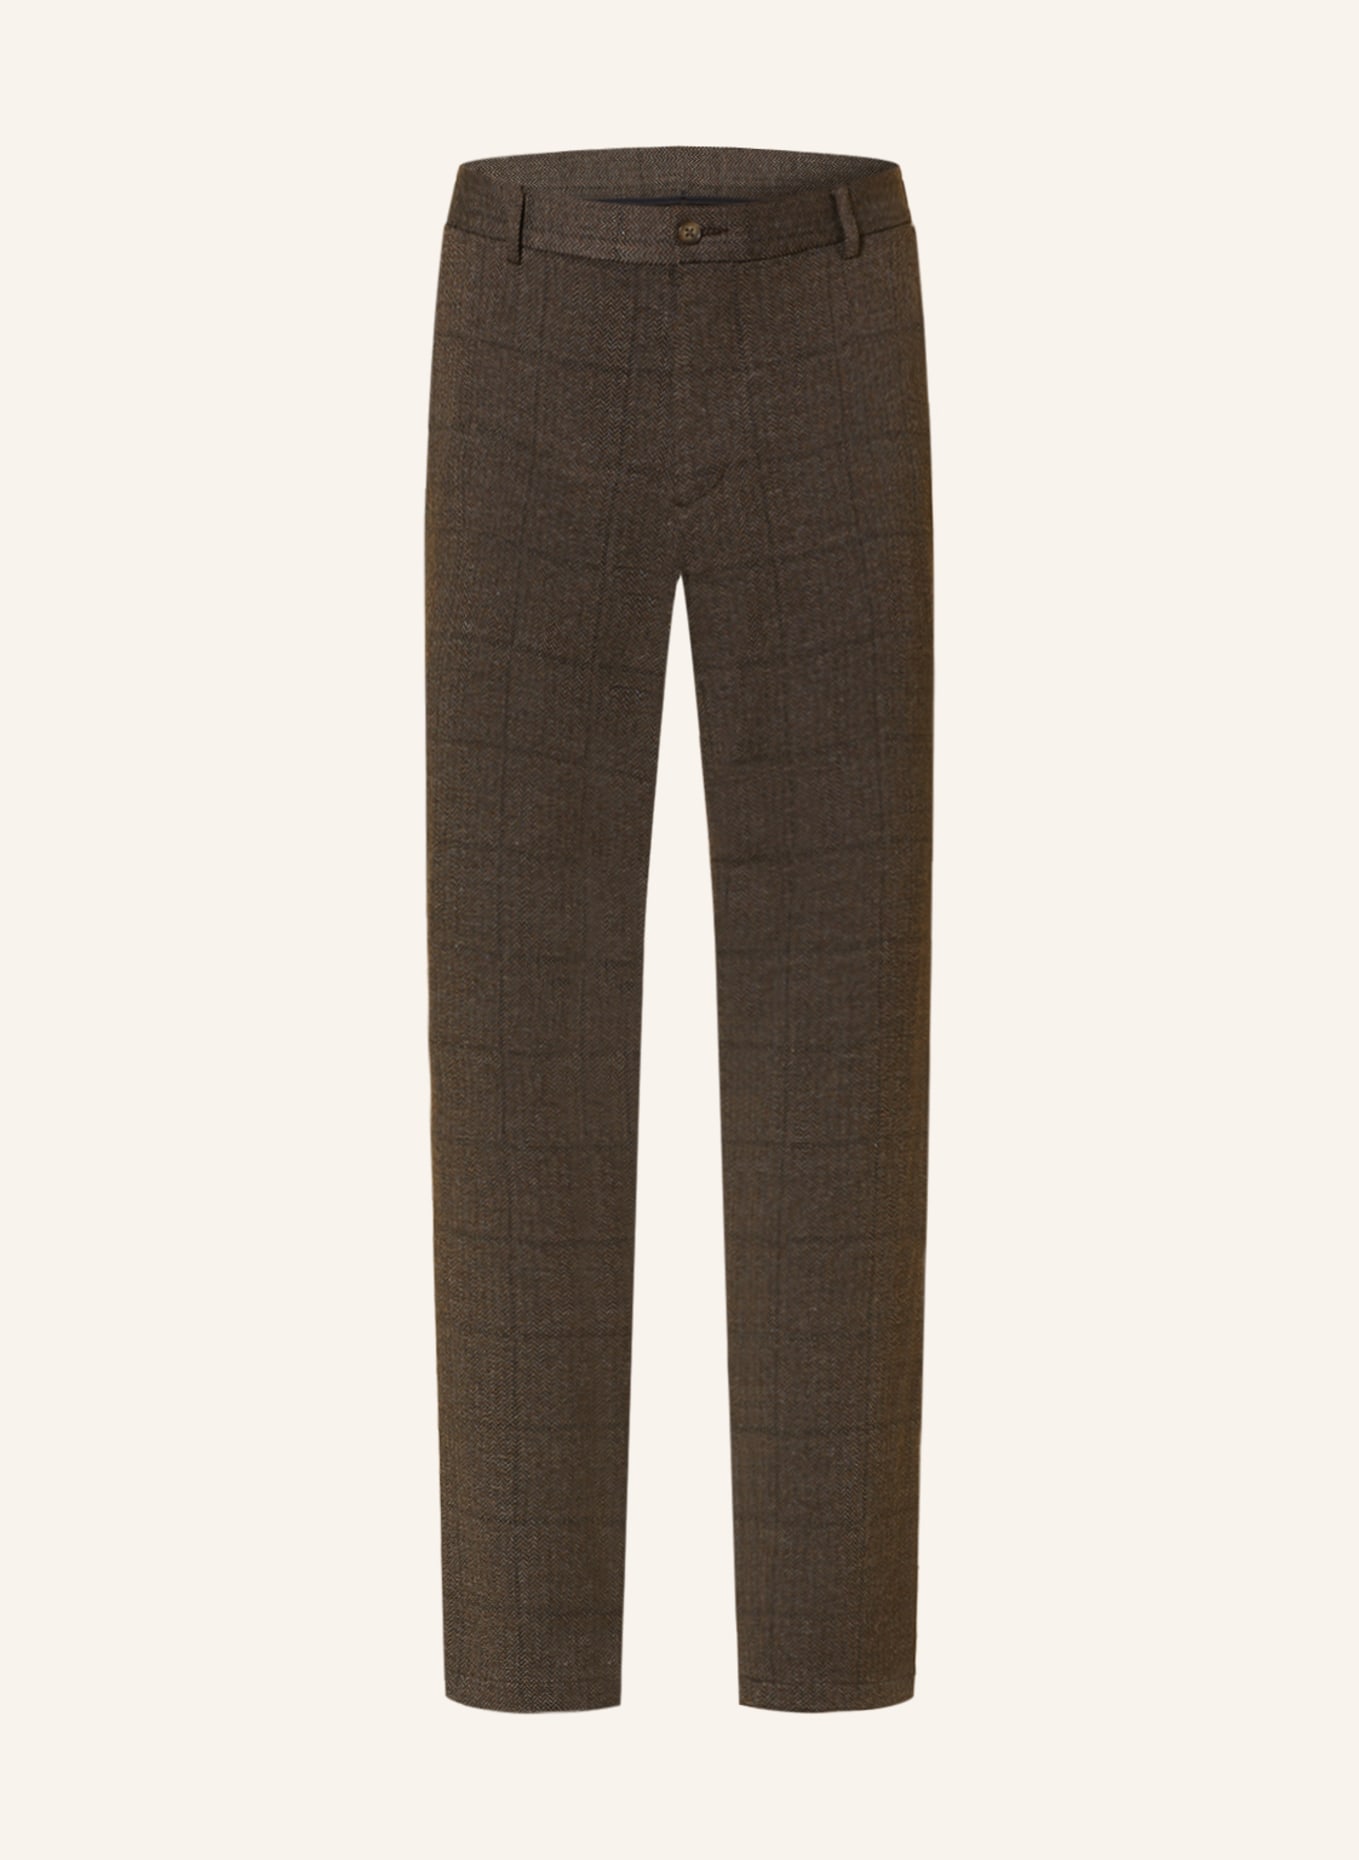 PAUL Anzughose Slim Fit aus Jersey, Farbe: 880 Brown (Bild 1)